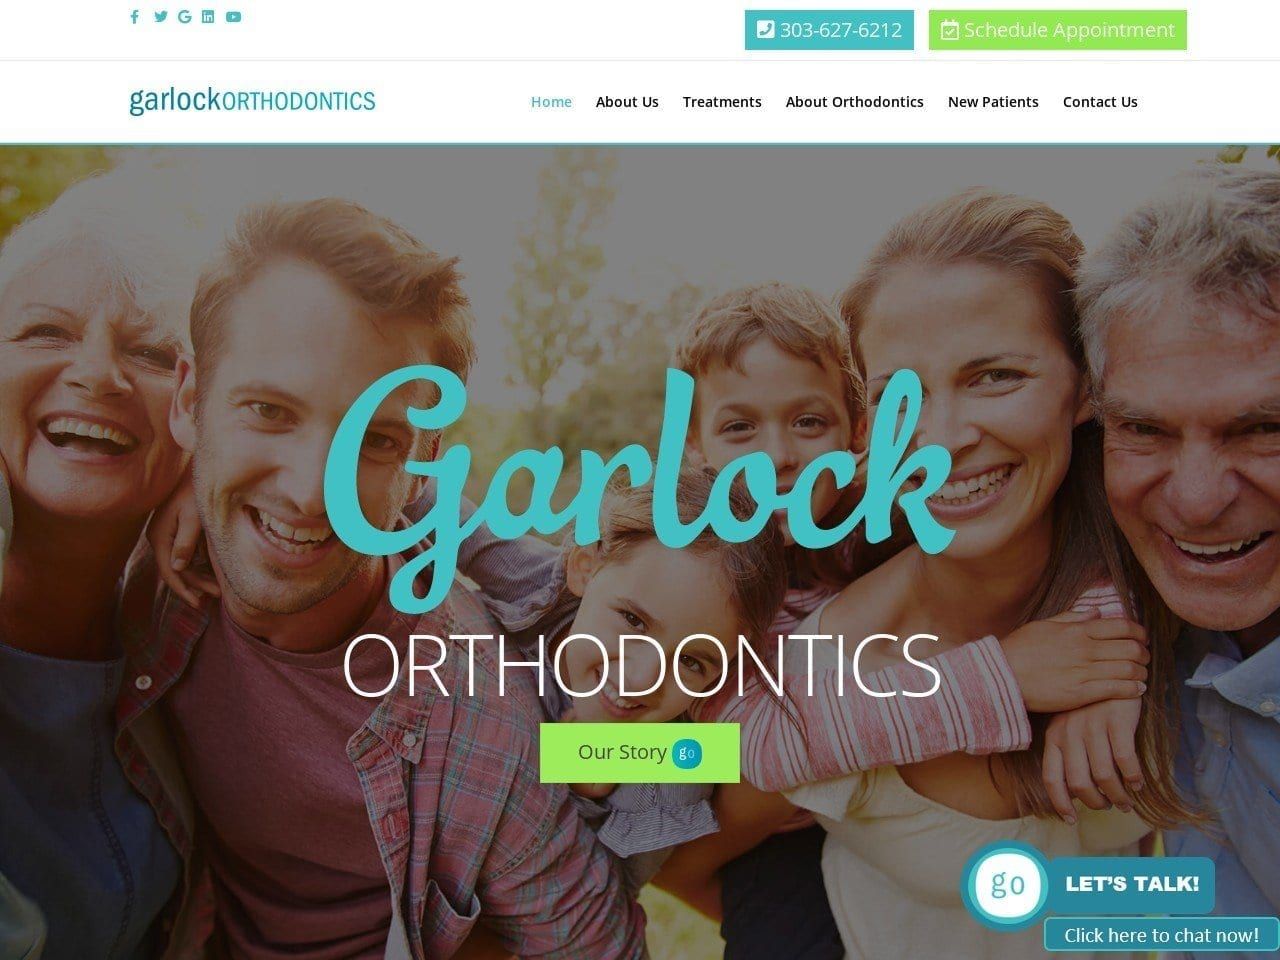 Garlock Orthodontics Website Screenshot from garlockortho.com